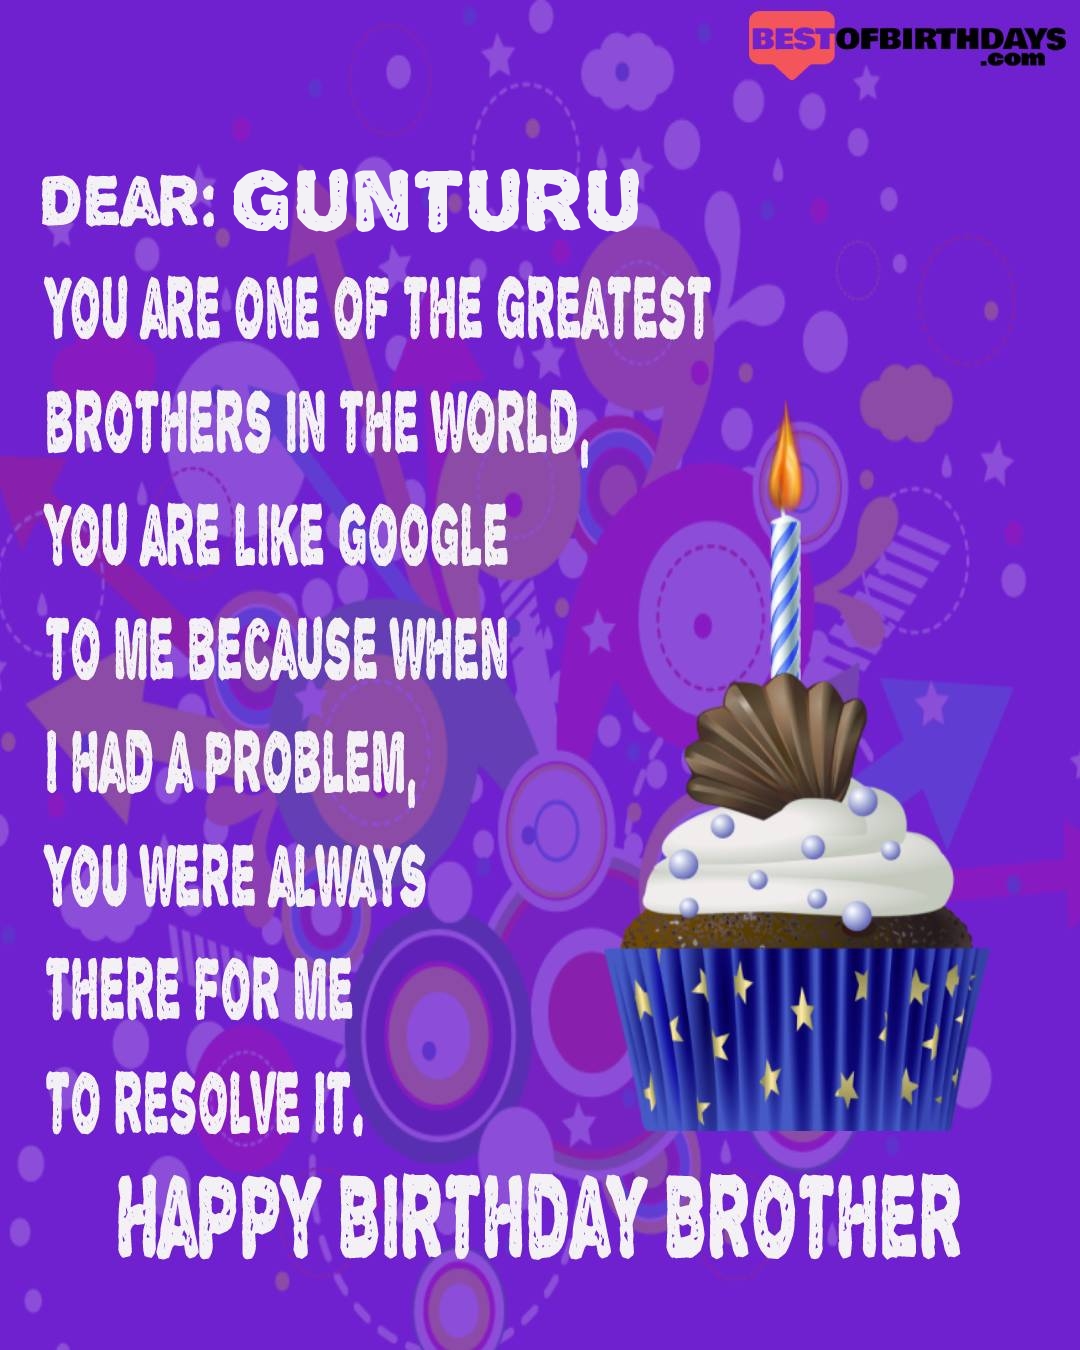 Happy birthday gunturu bhai brother bro